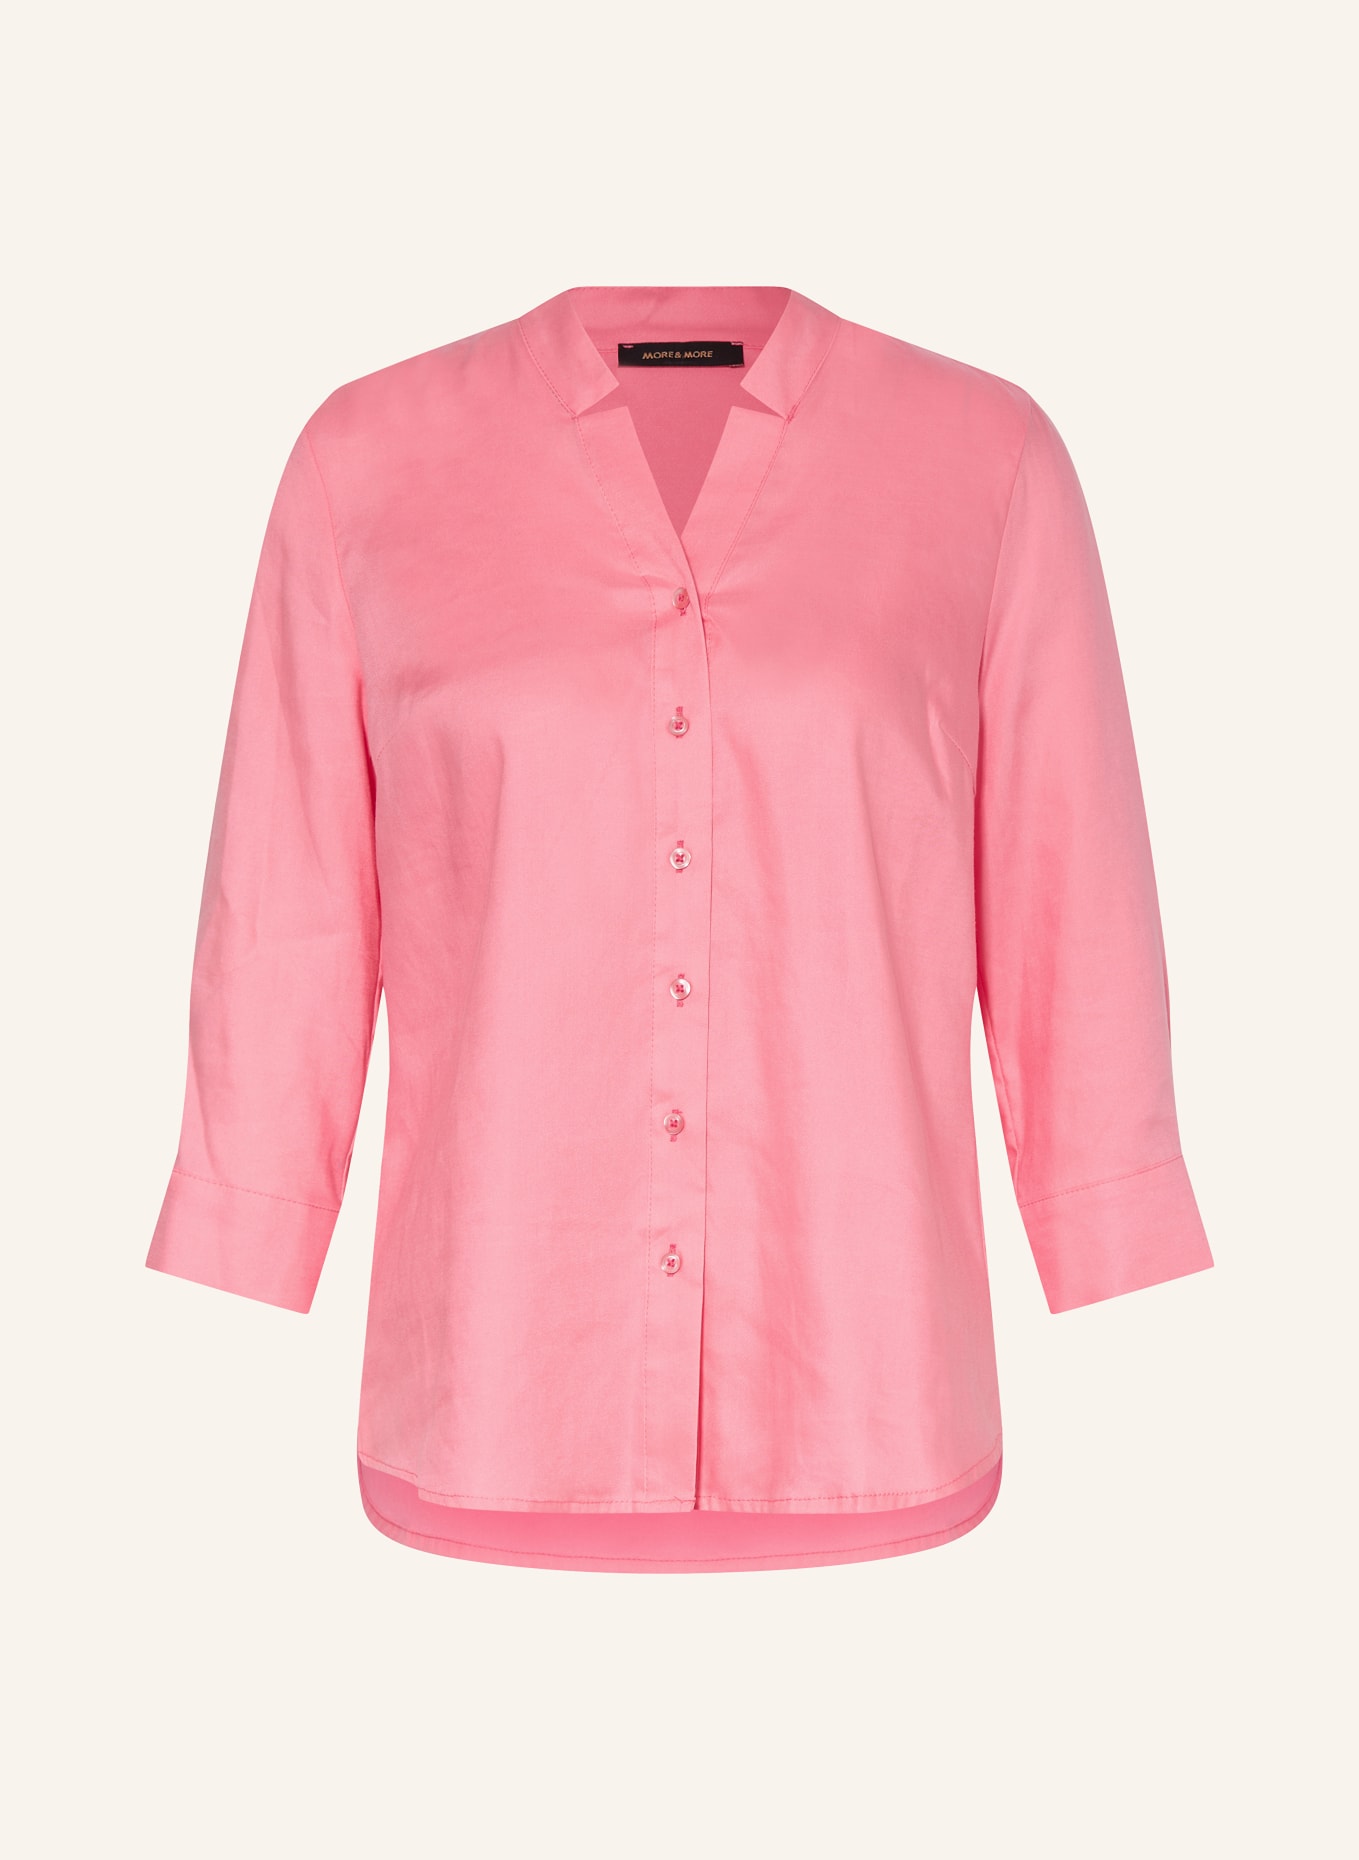 MORE & MORE Bluse mit 3/4-Arm, Farbe: 0835 sorbet pink (Bild 1)